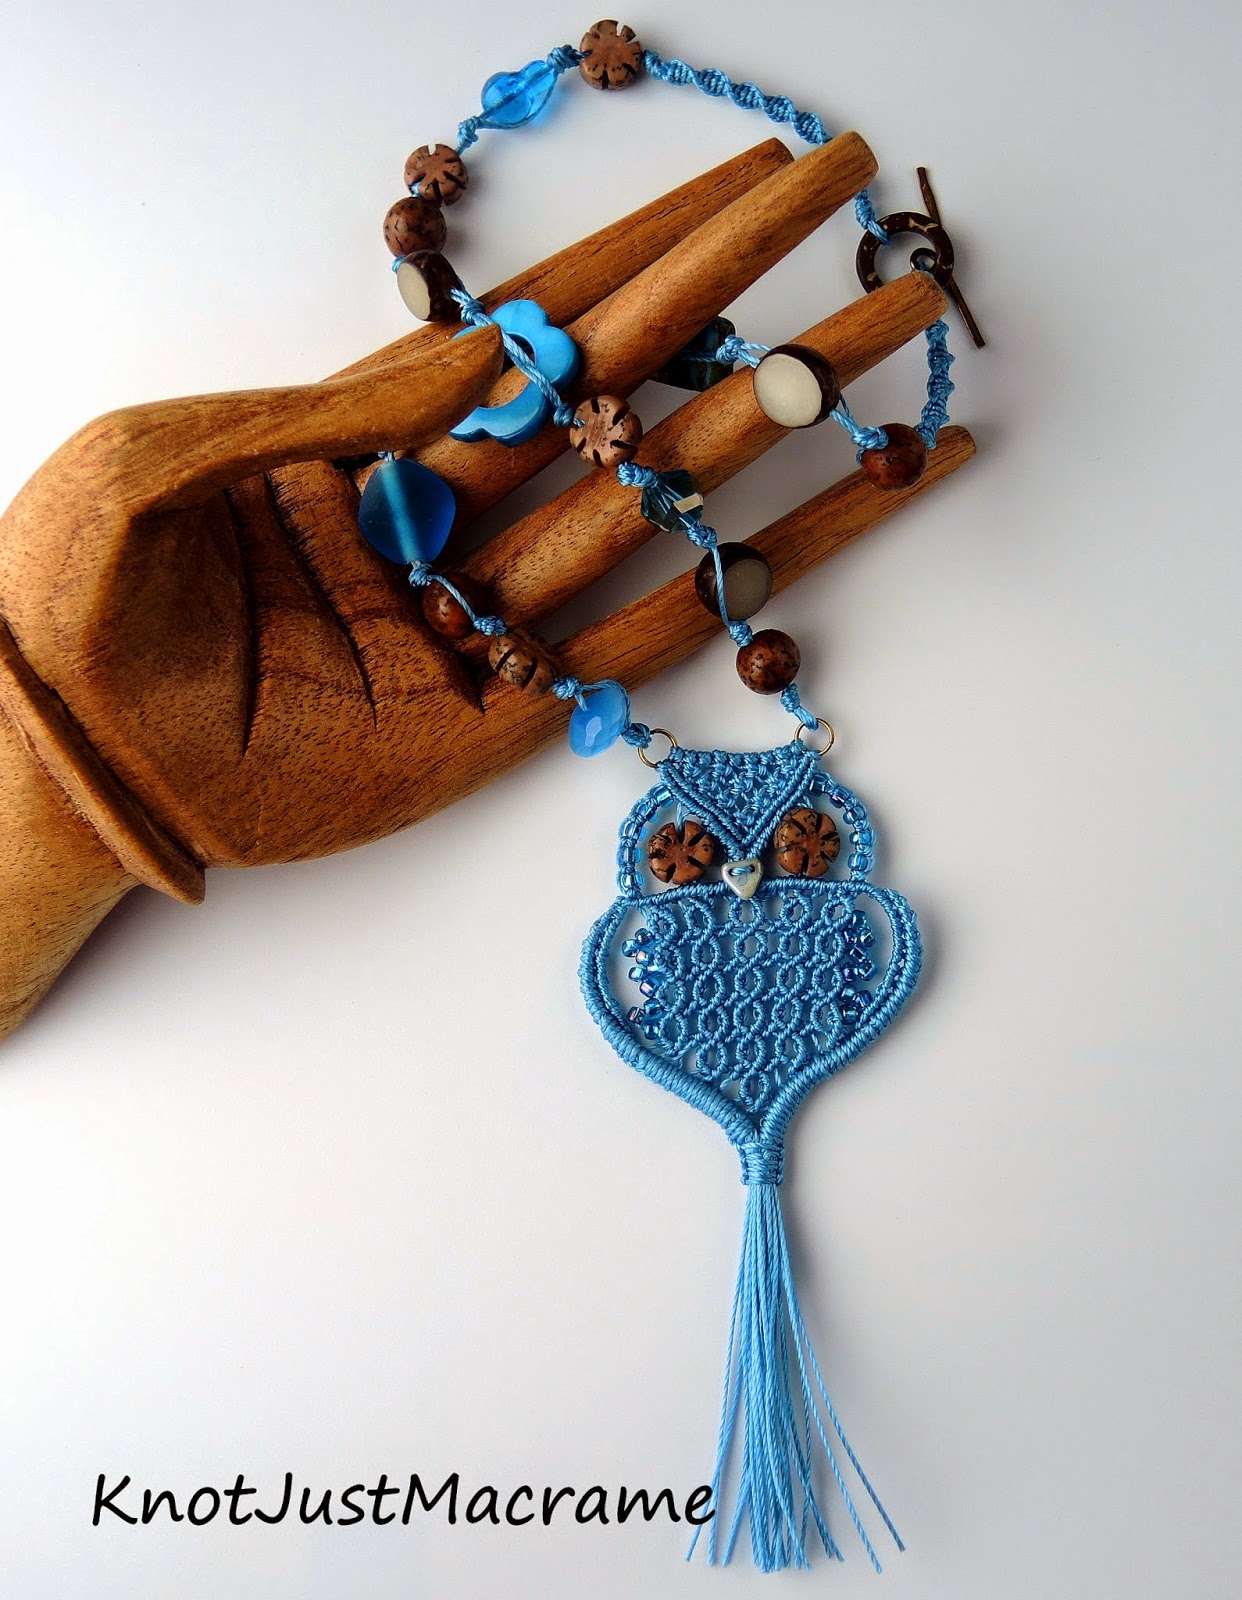 Micro macrame owl pendant necklace by Sherri Stokey of Knot Just Macrame.